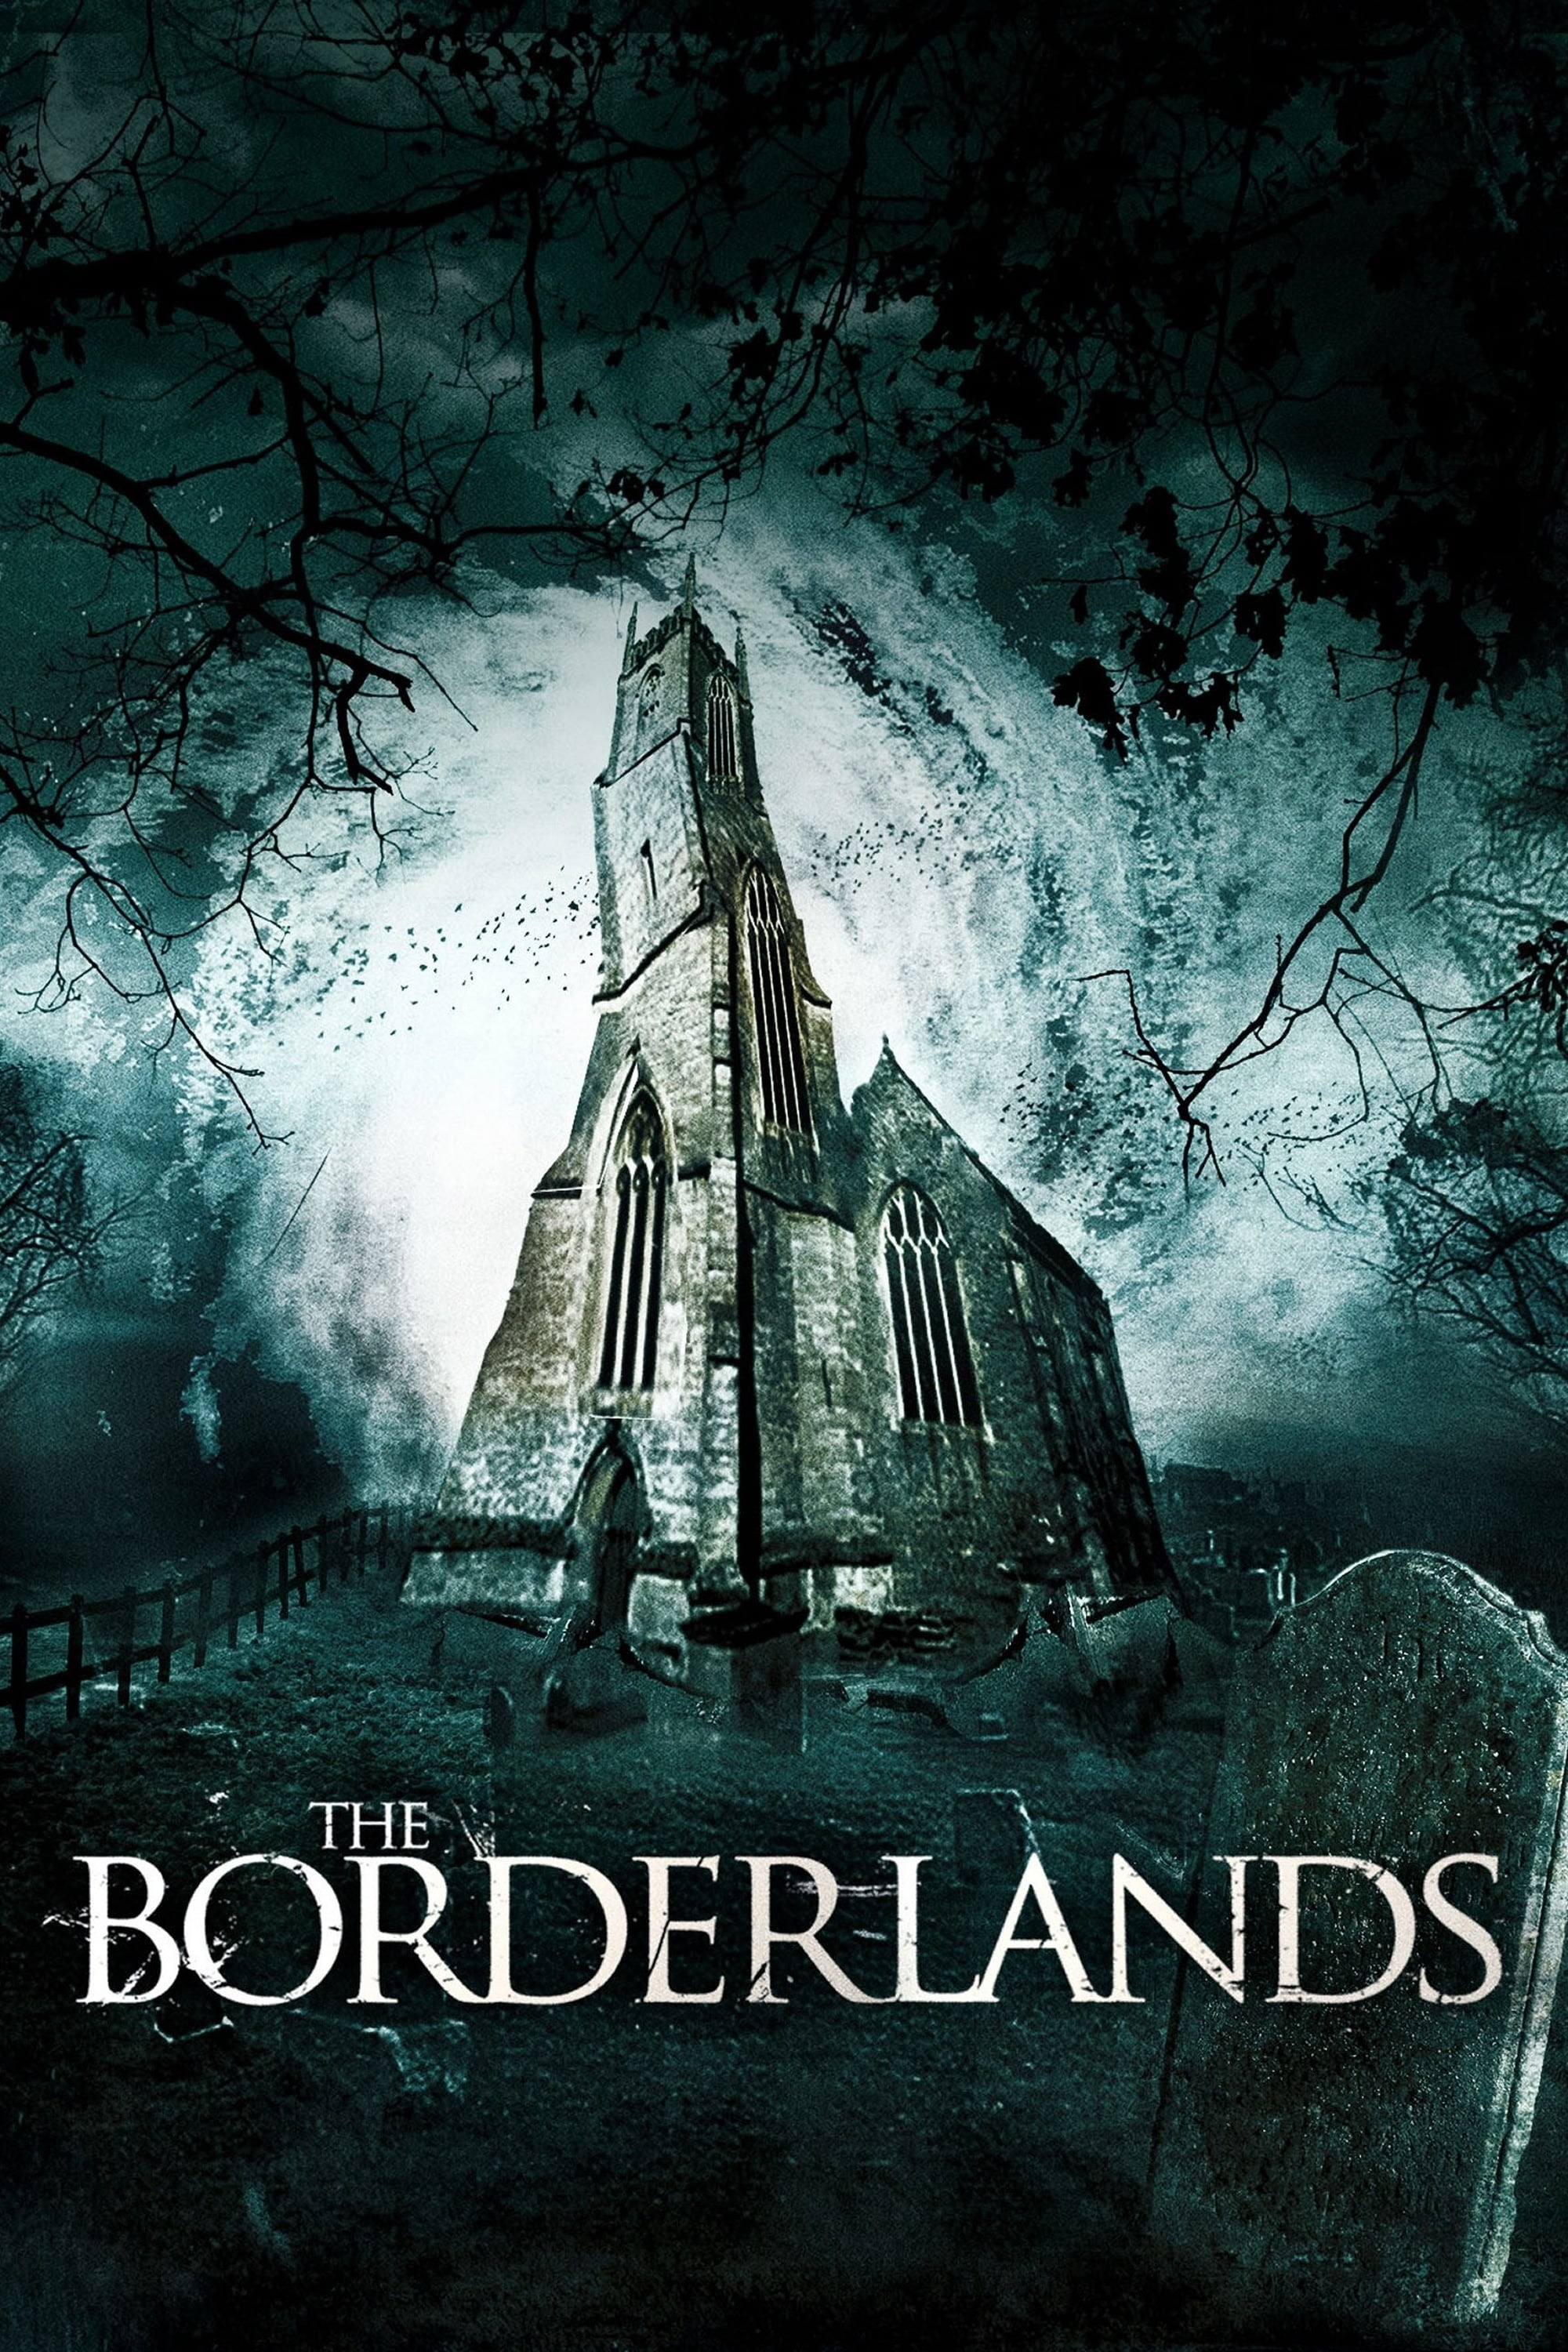 The Borderlands (2013) 1080p mockumentary/found footage